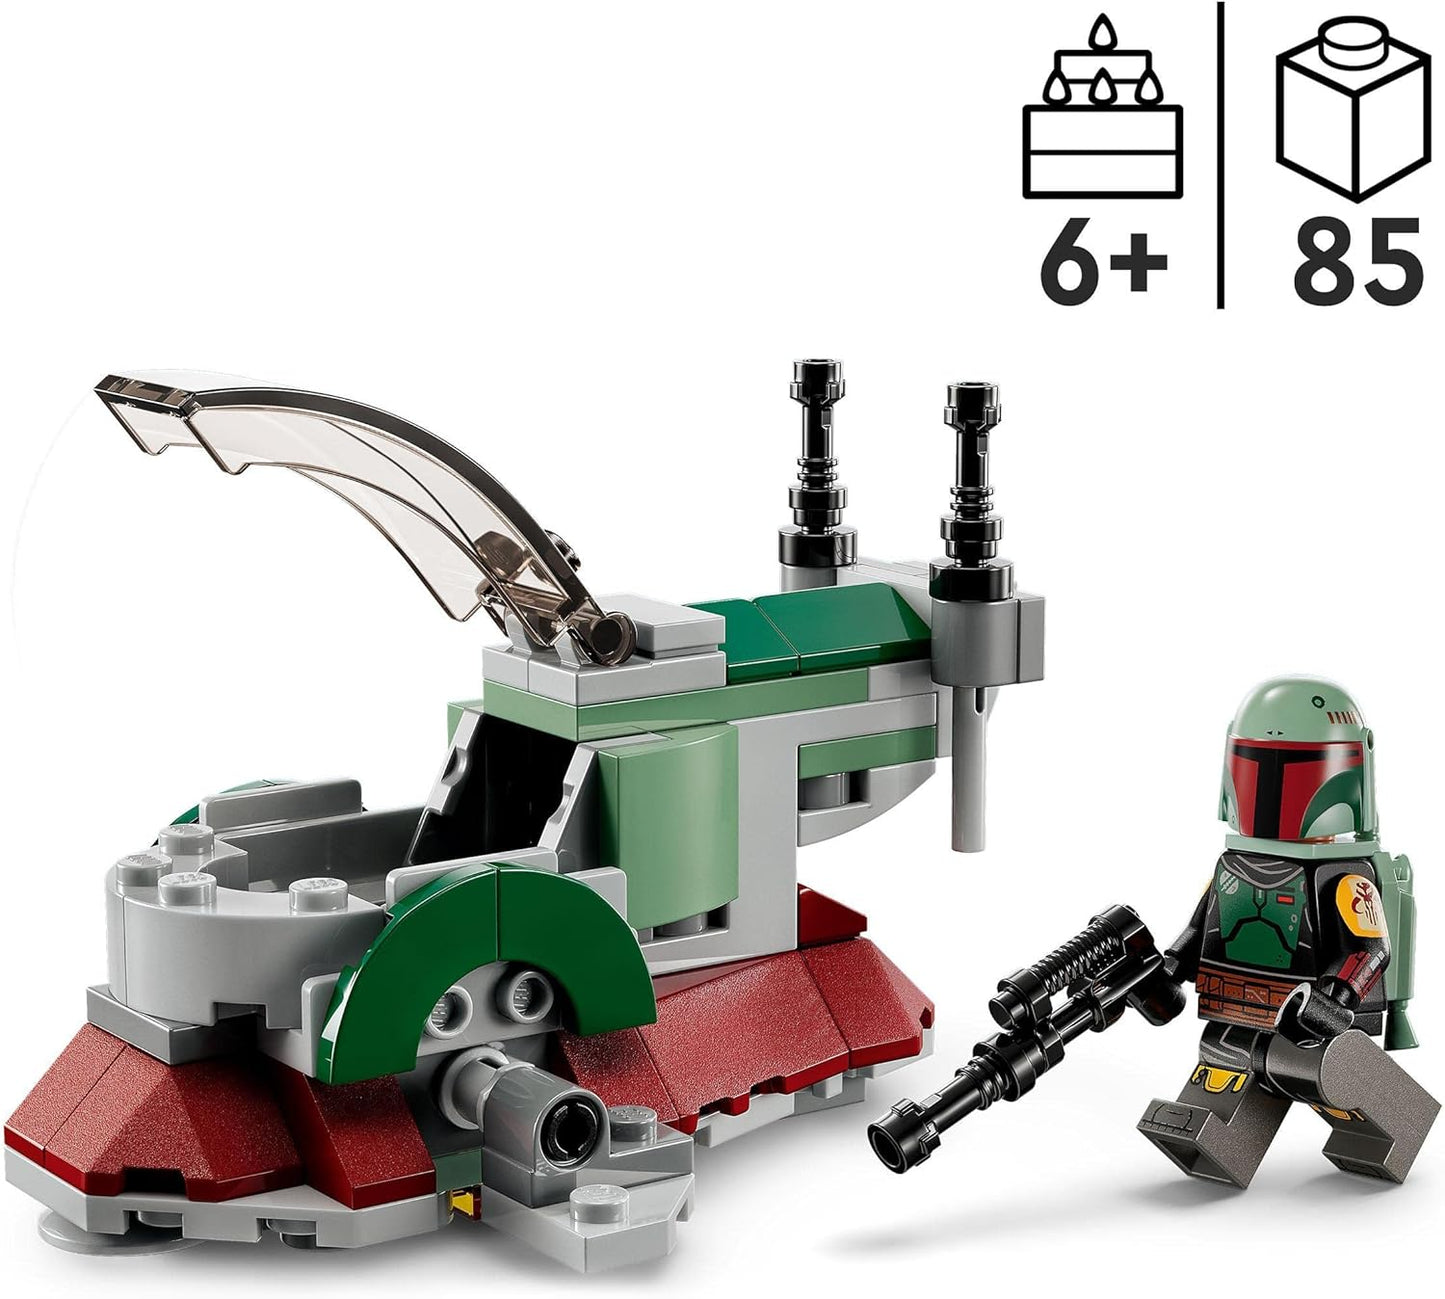 LEGO Star Wars - Boba Fett's Starship Microfighter 75344